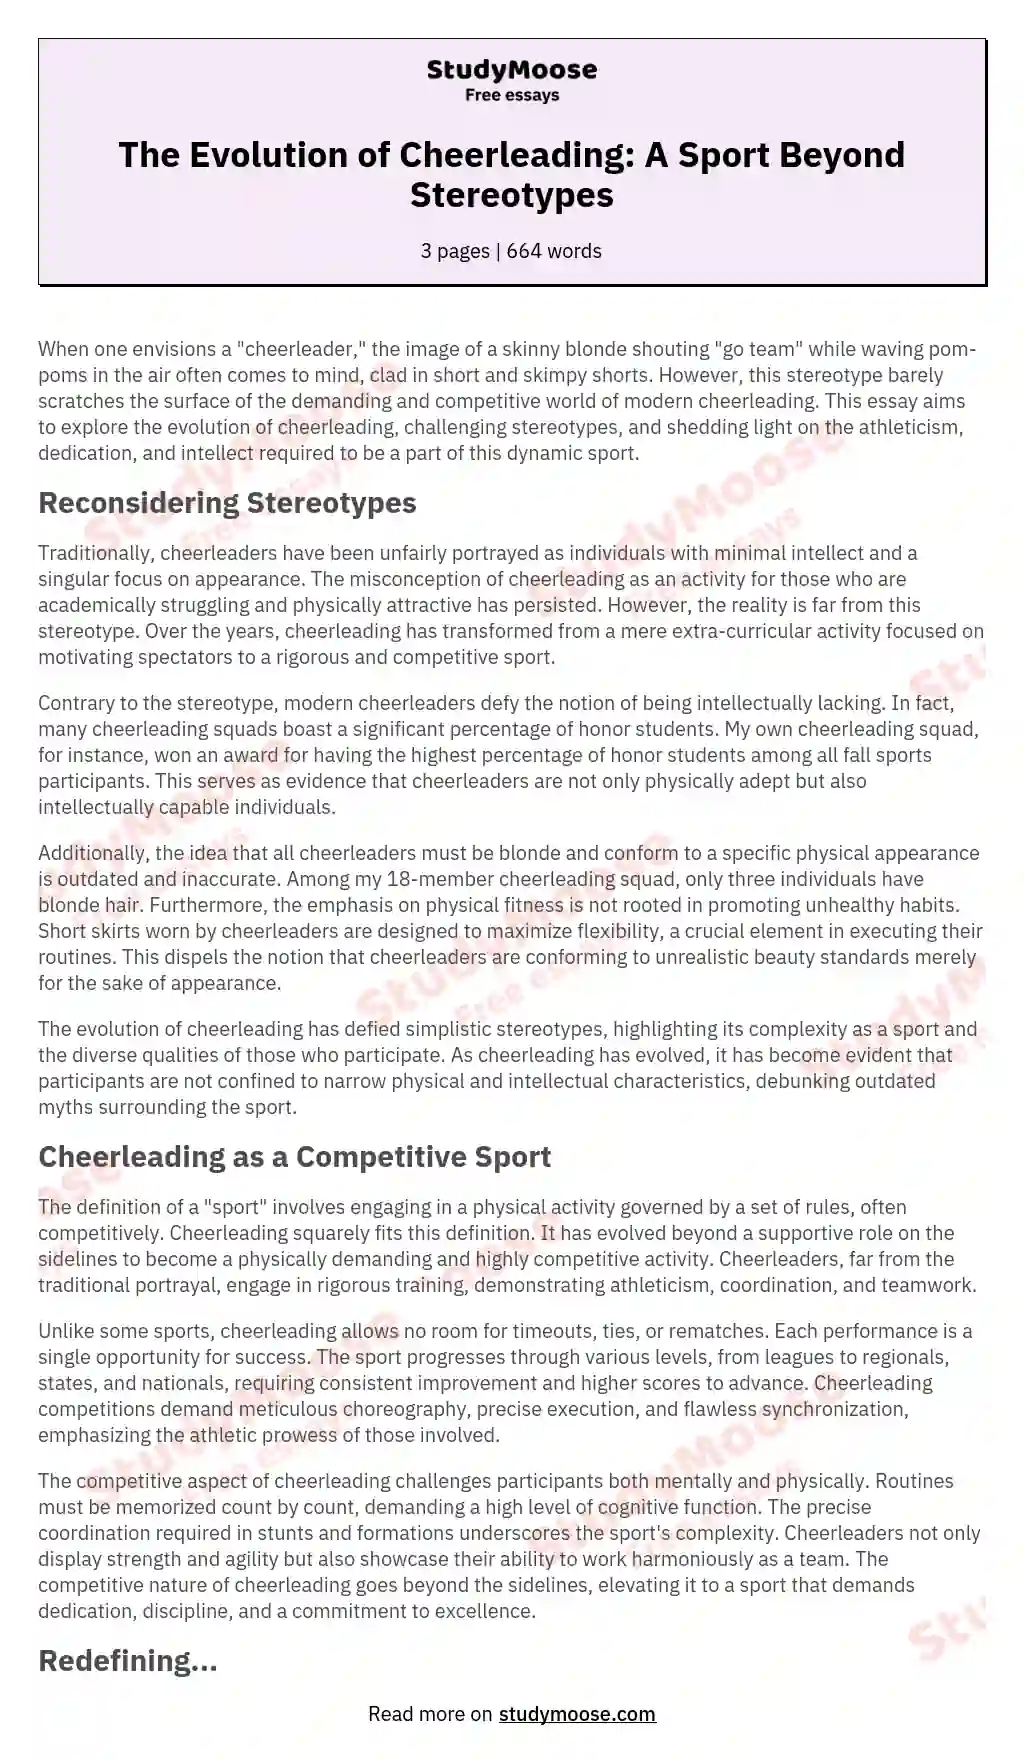 history of cheerleading essay